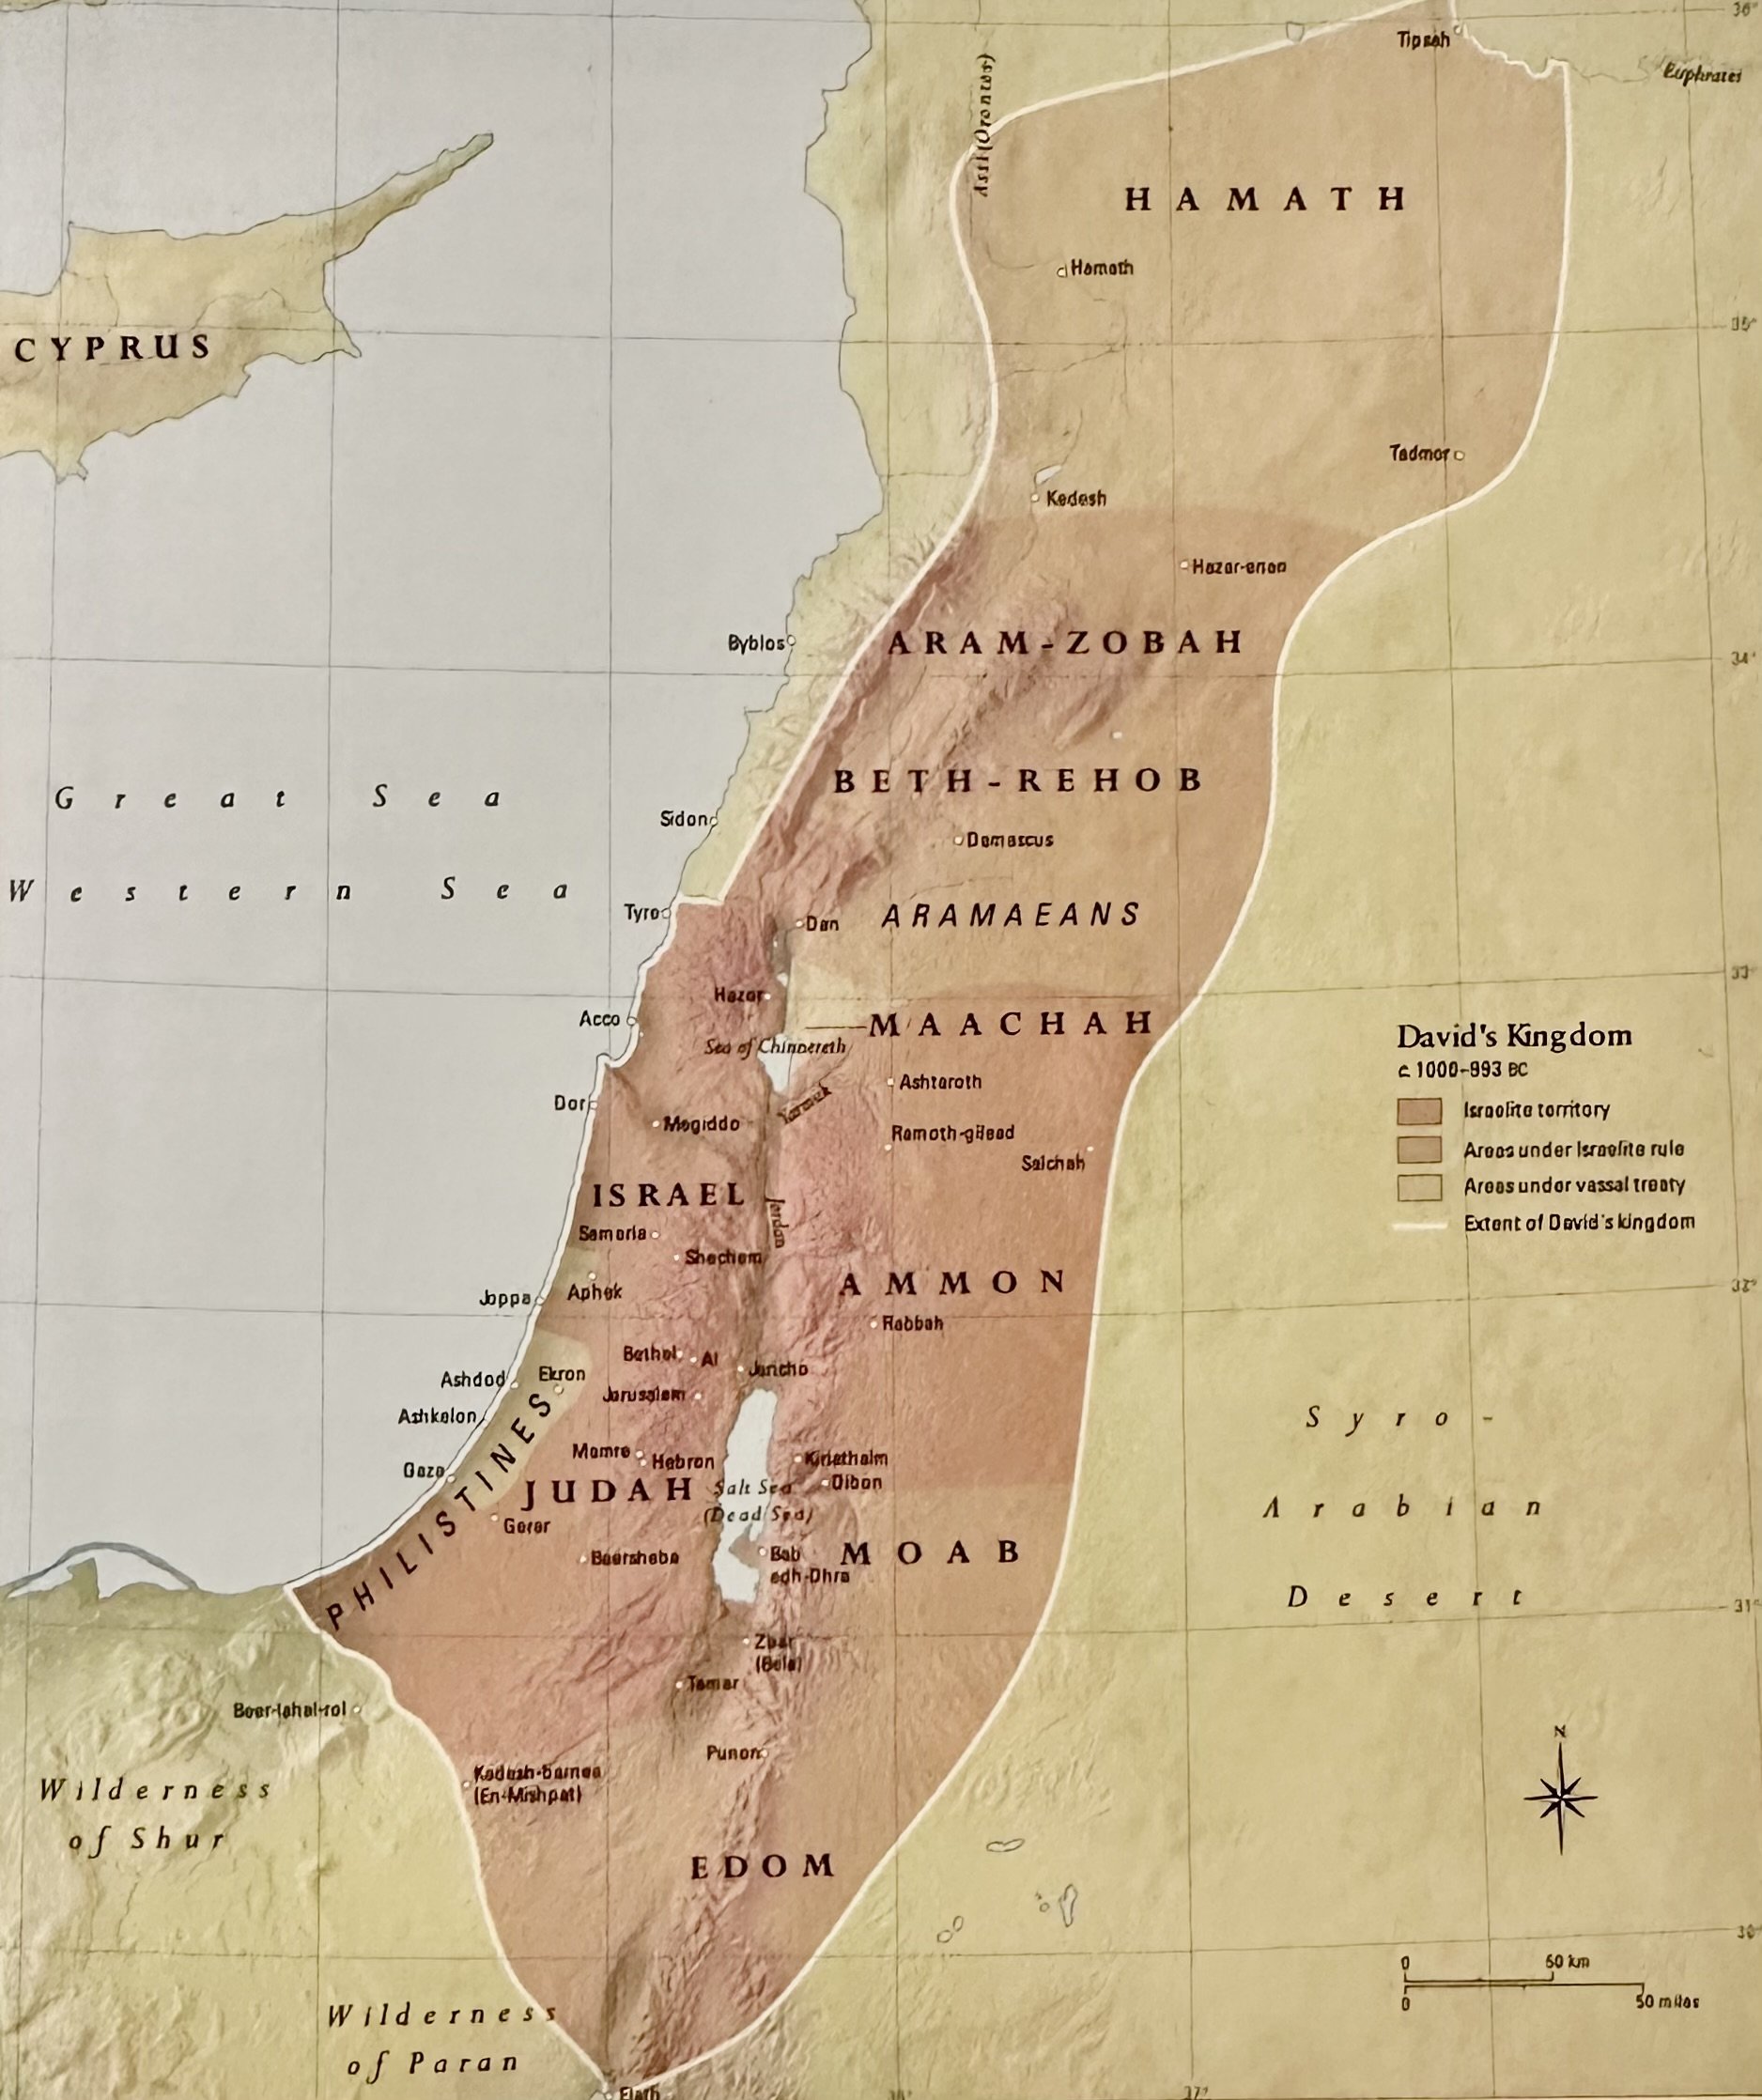 1000-993 BCE Davids Kingdom Atlas of the Bible.jpeg